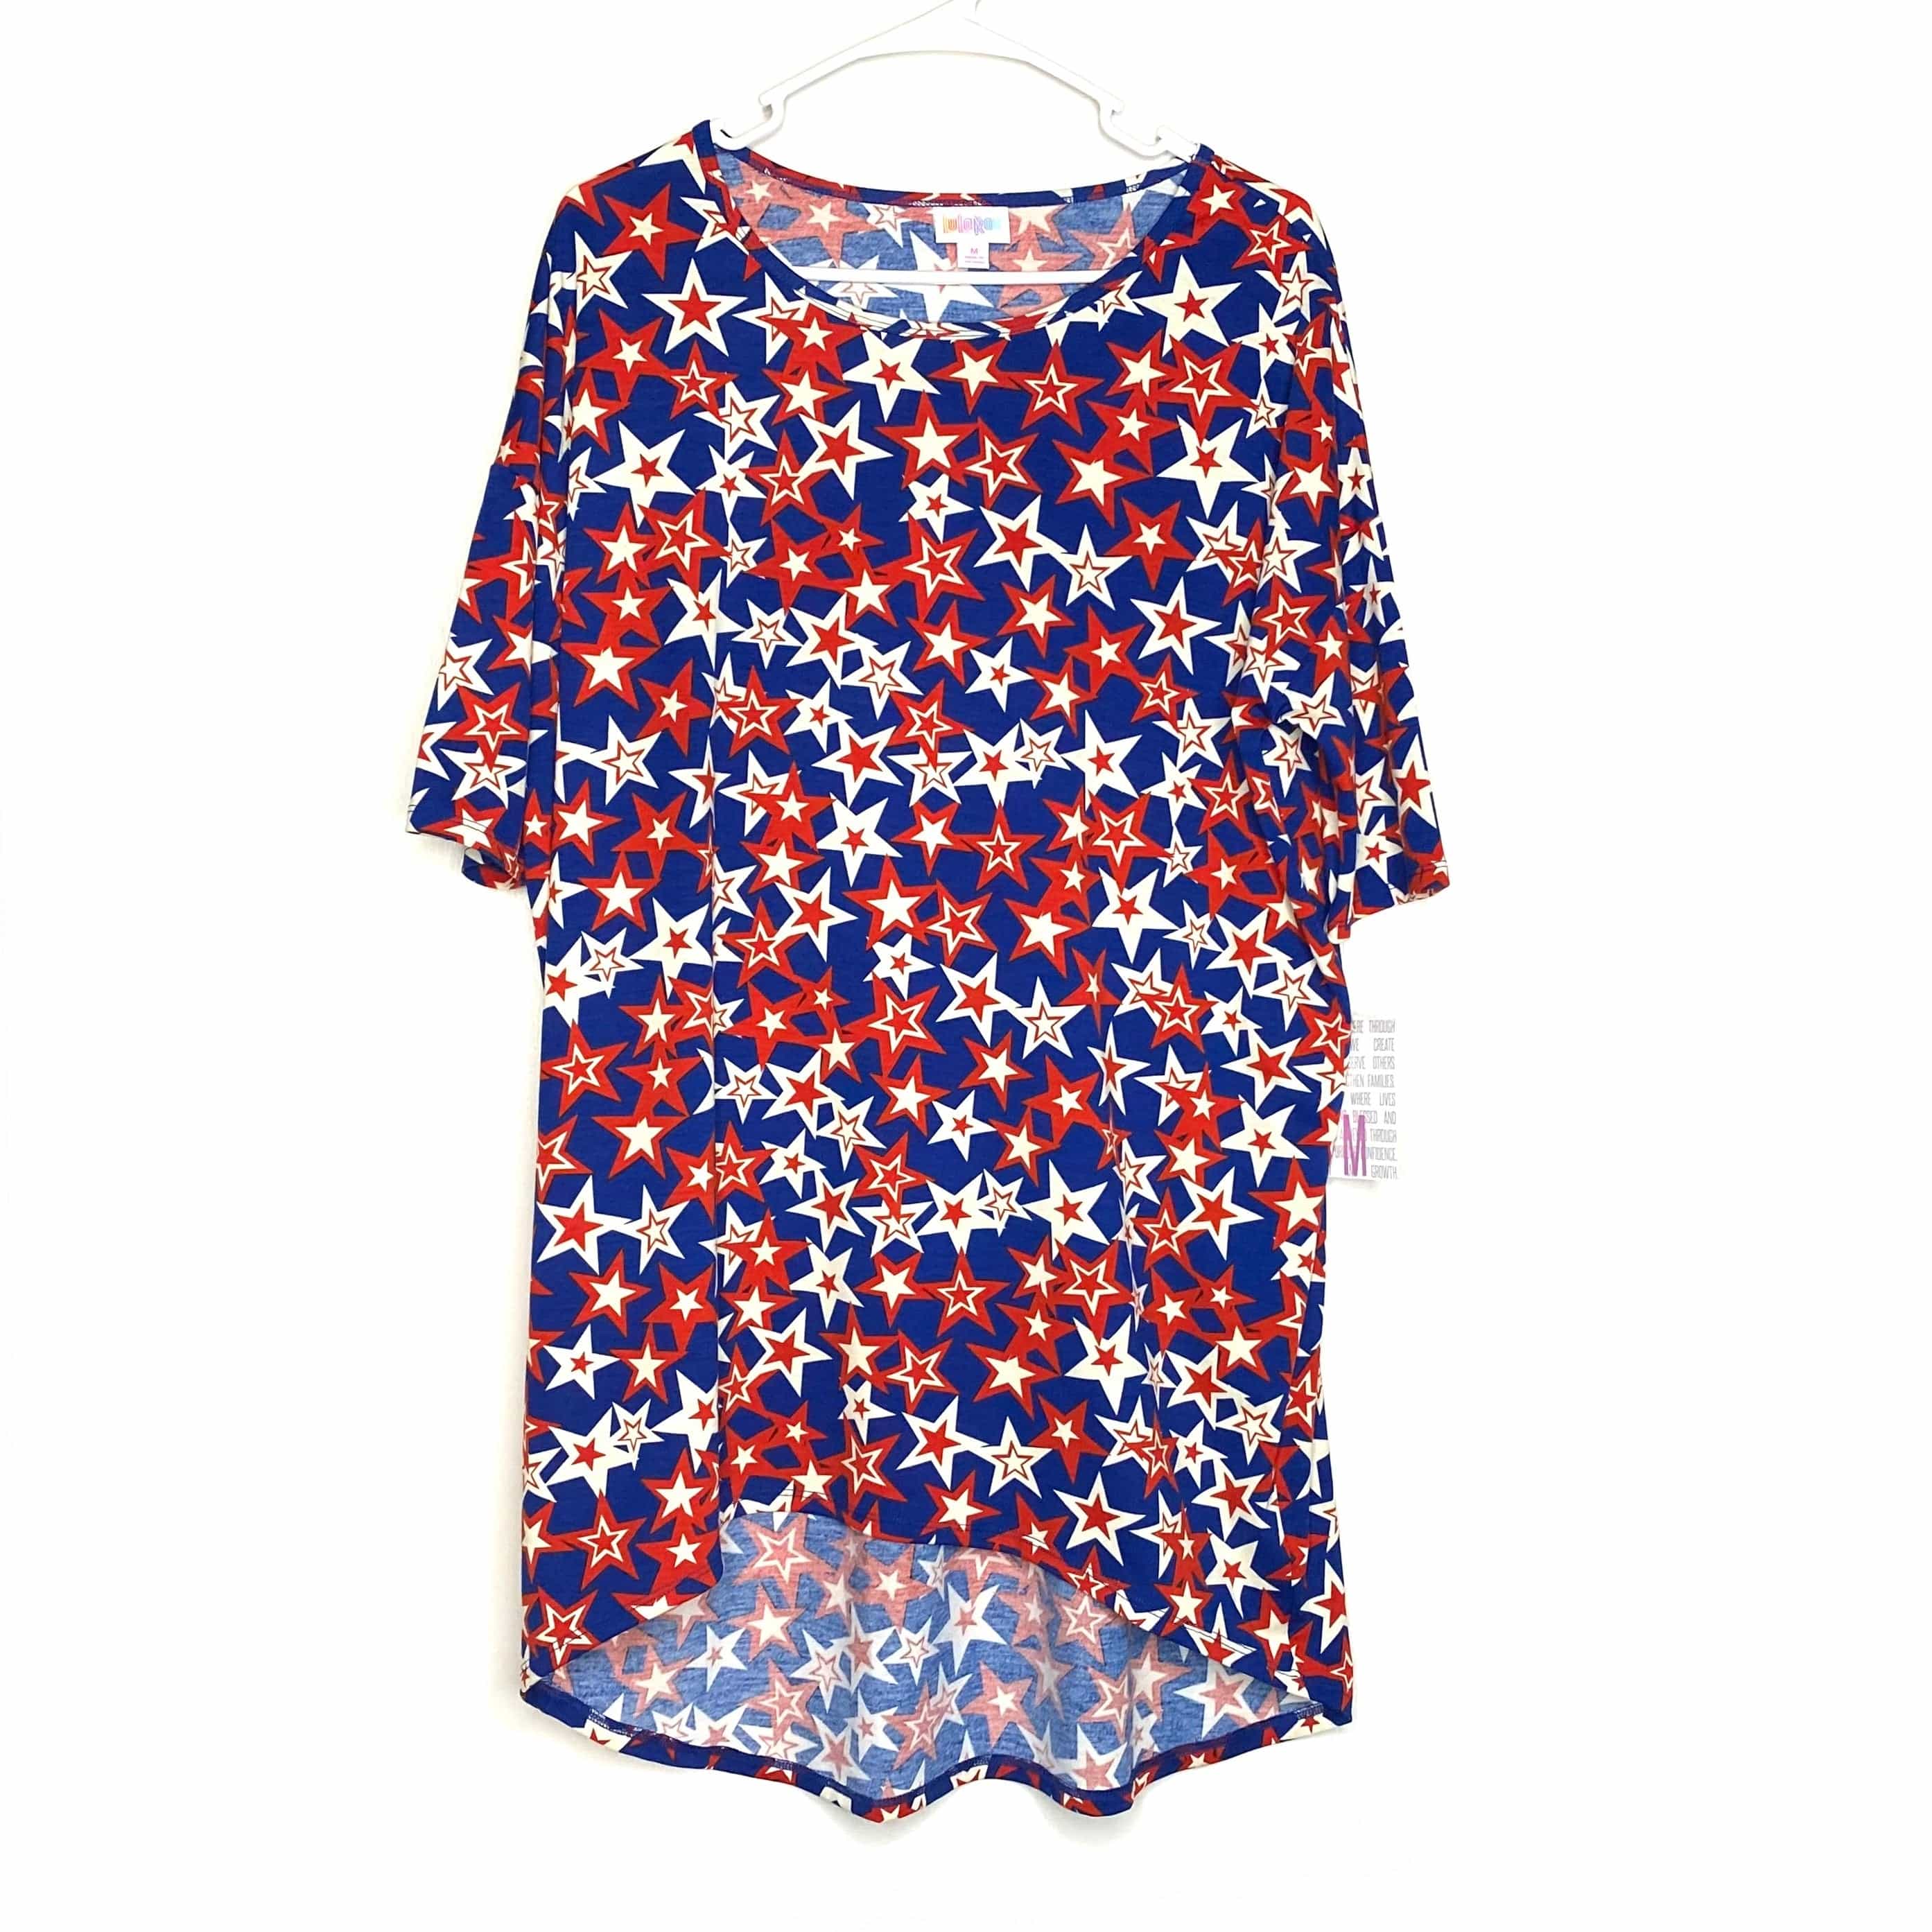 LuLaRoe Womens Size M Irma Red/White/Blue Stars T-Shirt S/s NWT